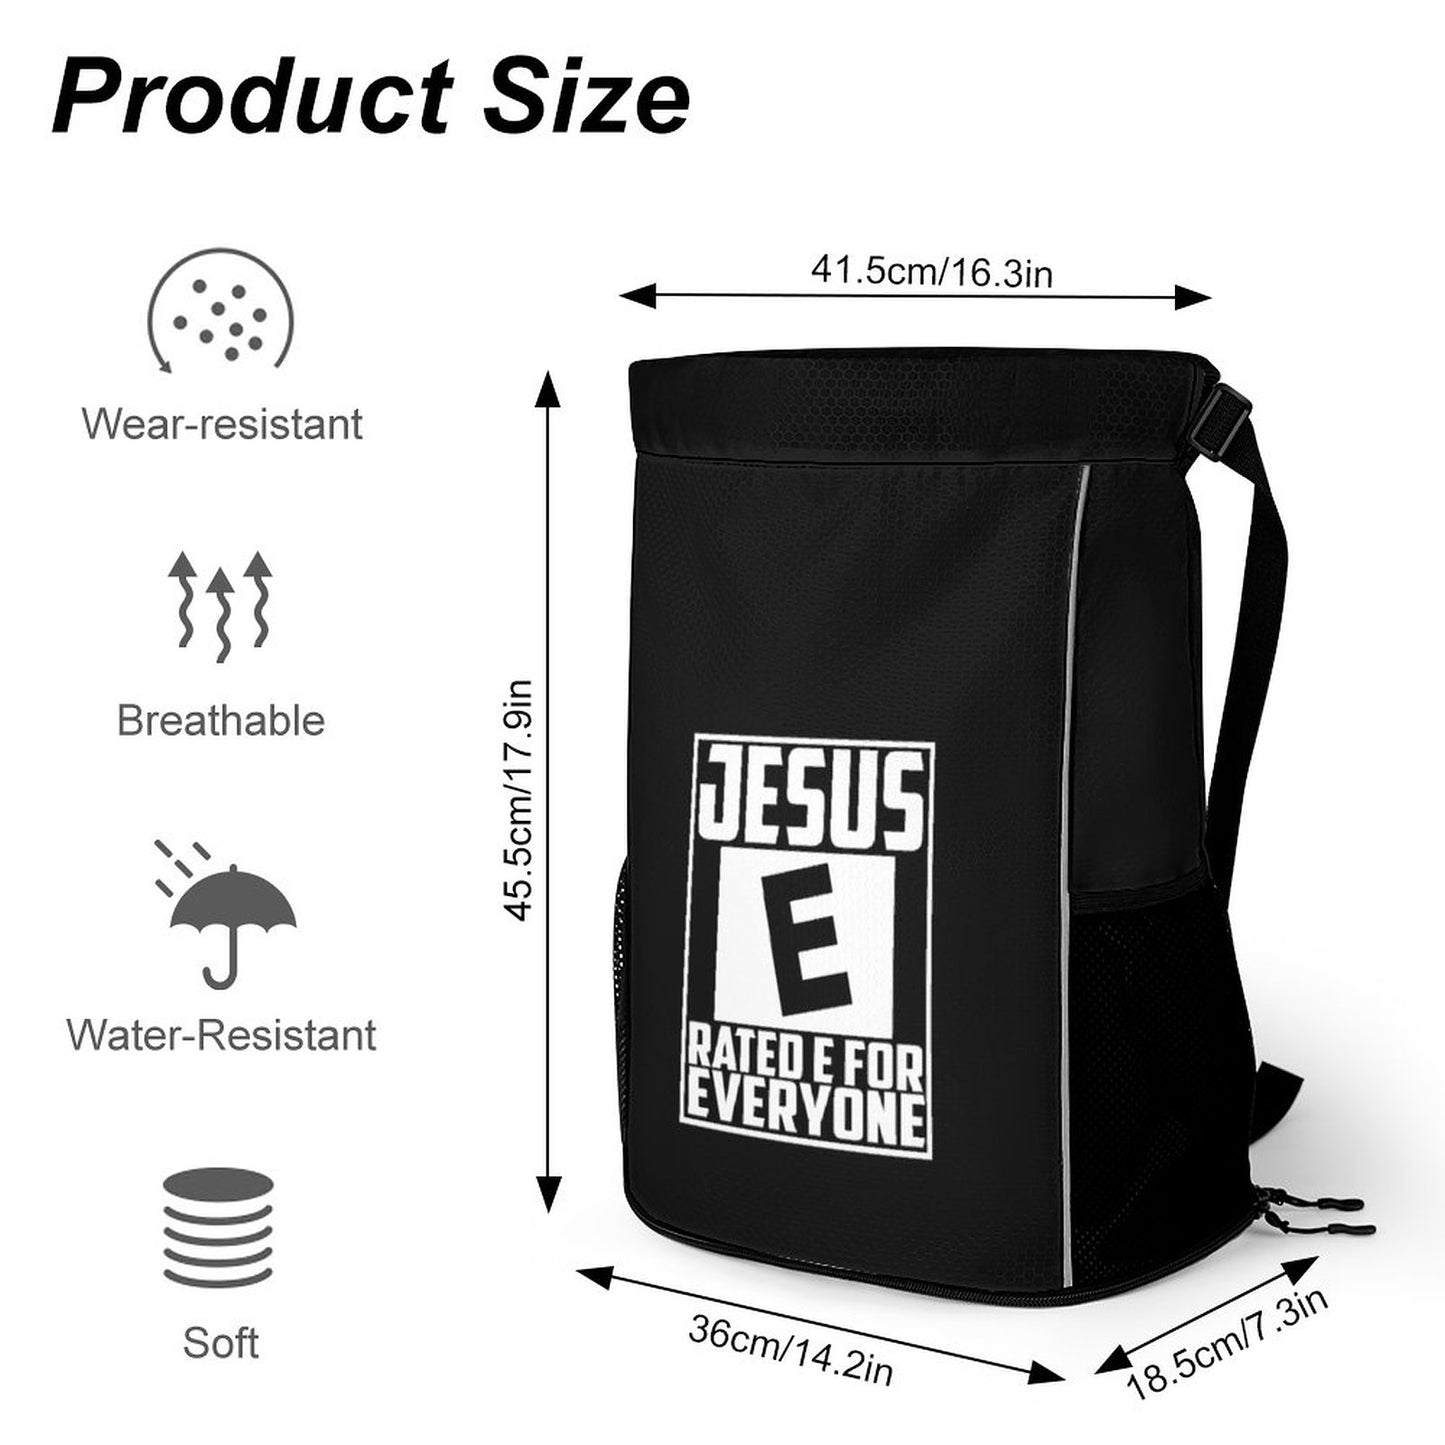 Jesus Rated E For Everyone Christian Waffle Cloth Drawstring Bag